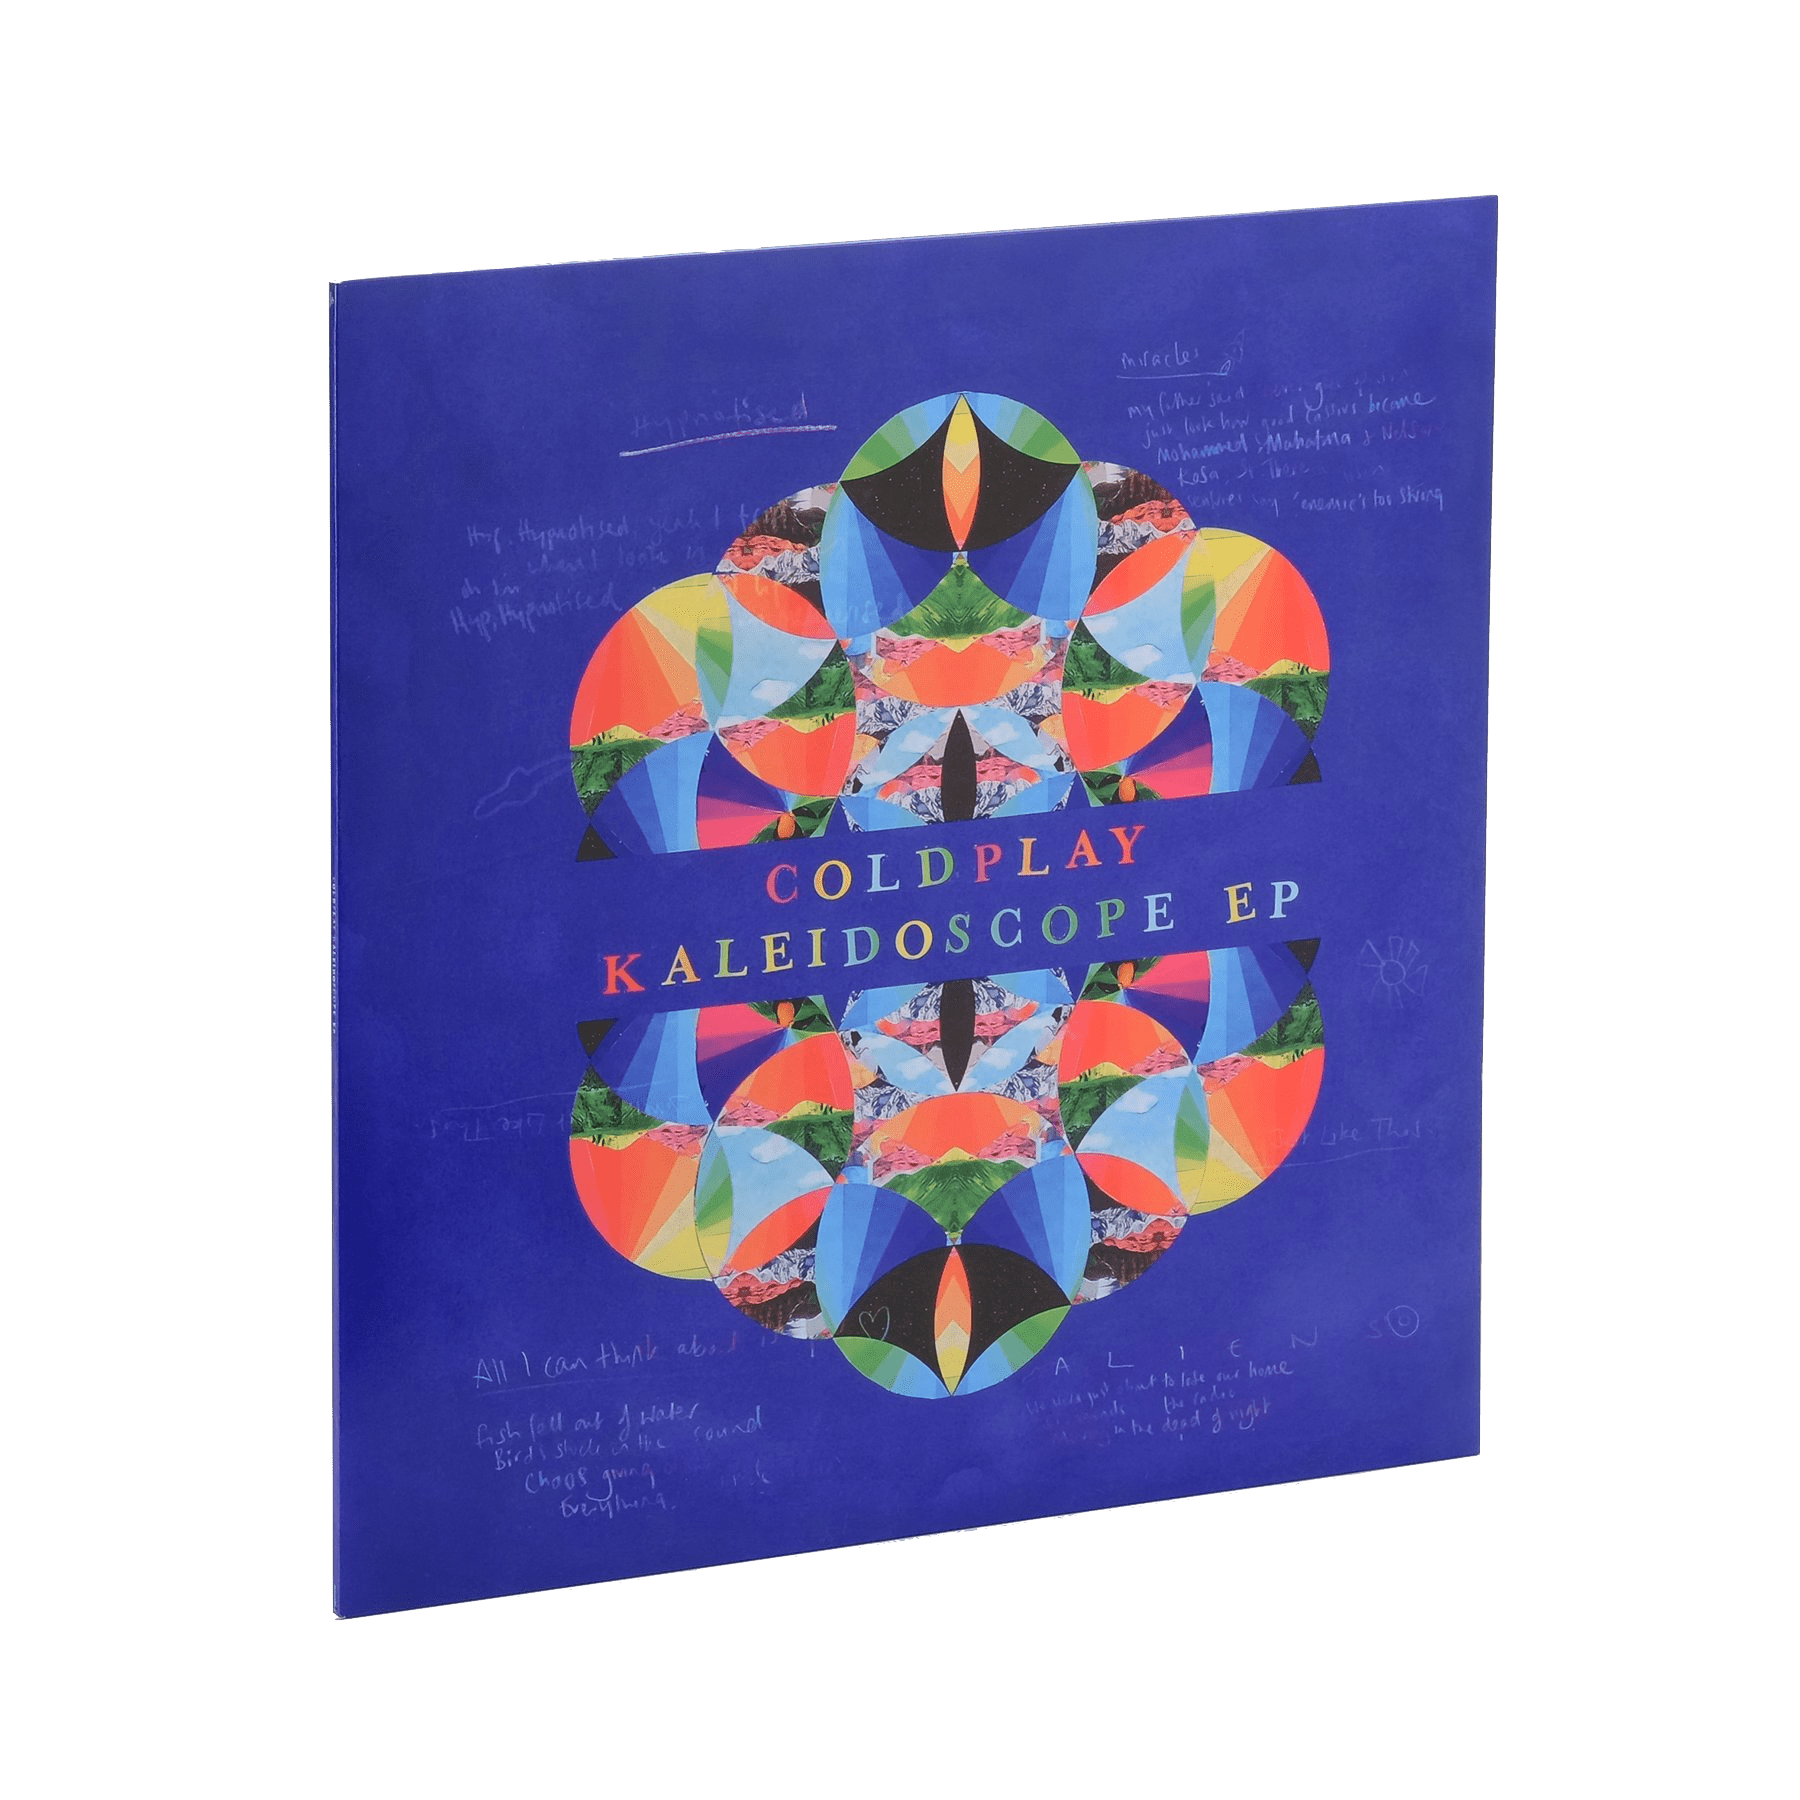 Coldplay - Kaleidoscope (Poster, 180 Gram) (LP) - Joco Records